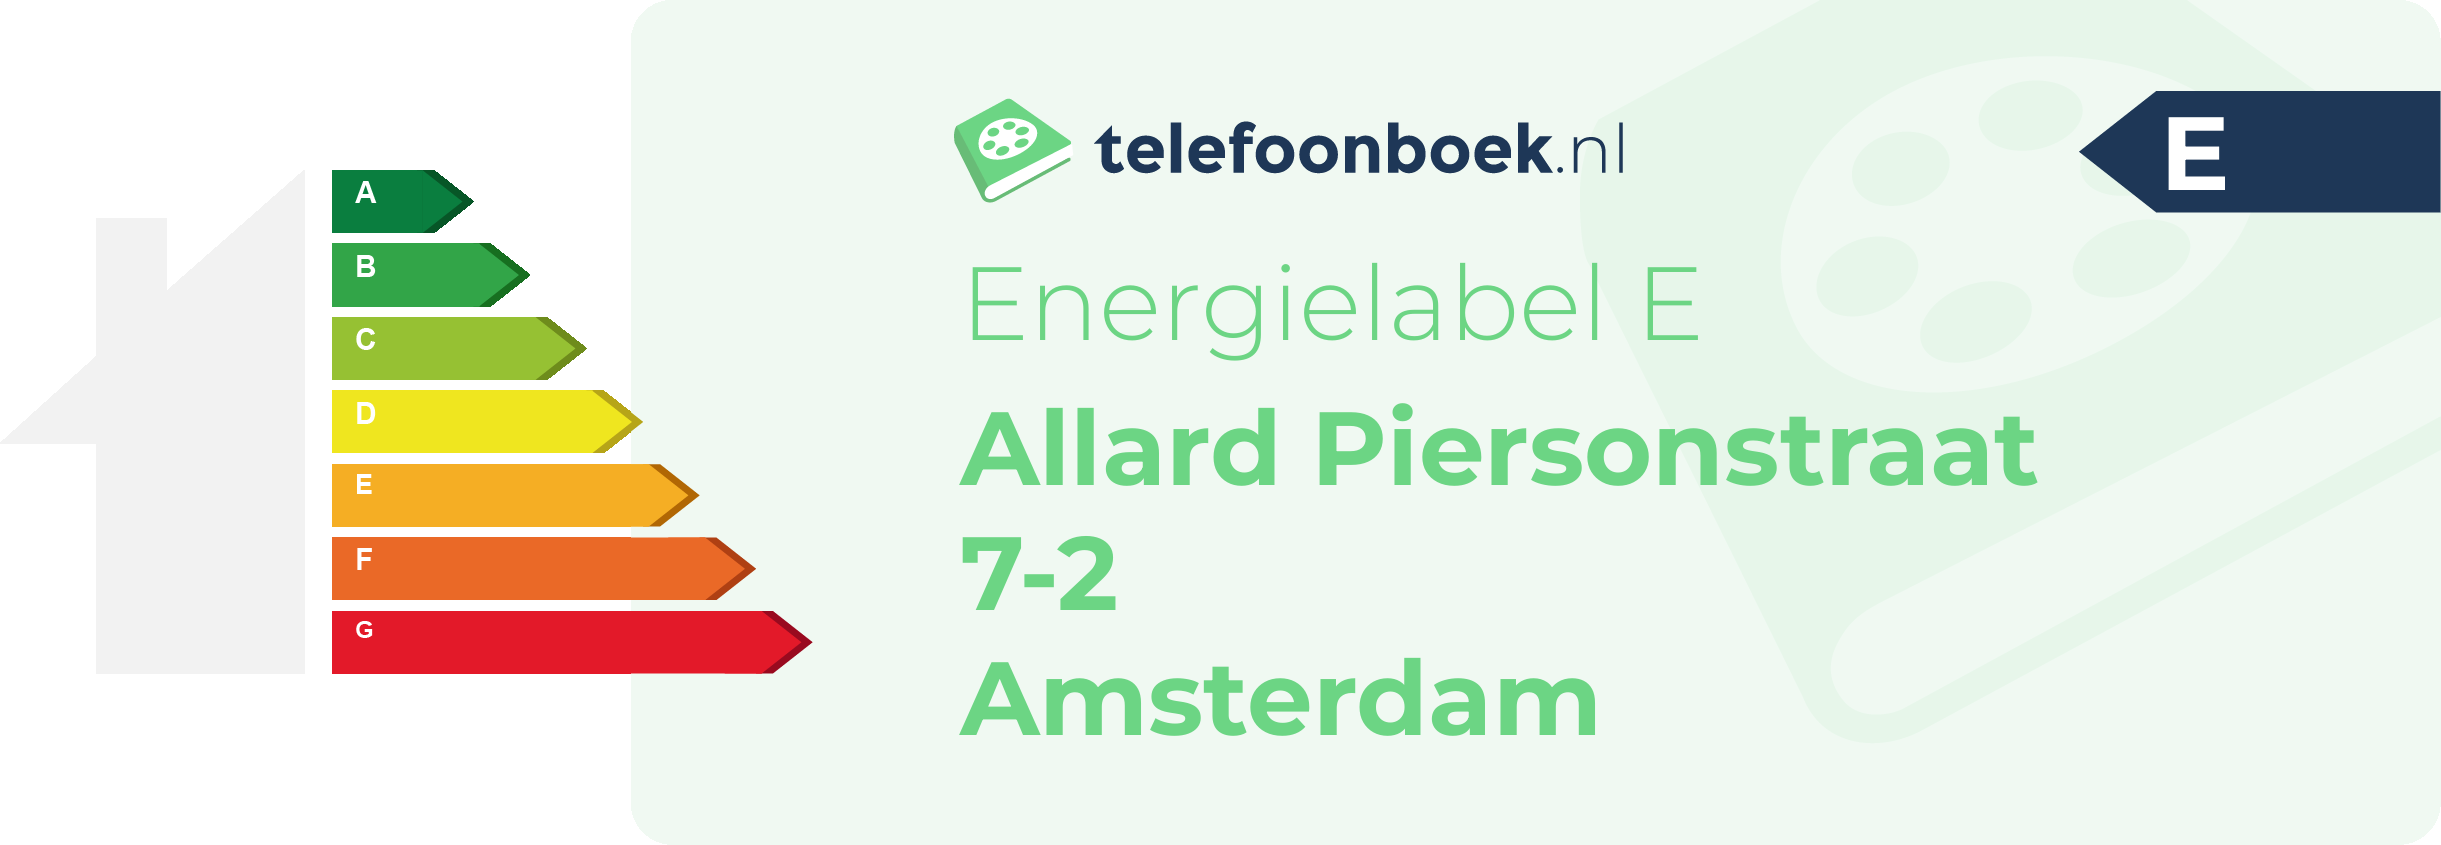 Energielabel Allard Piersonstraat 7-2 Amsterdam